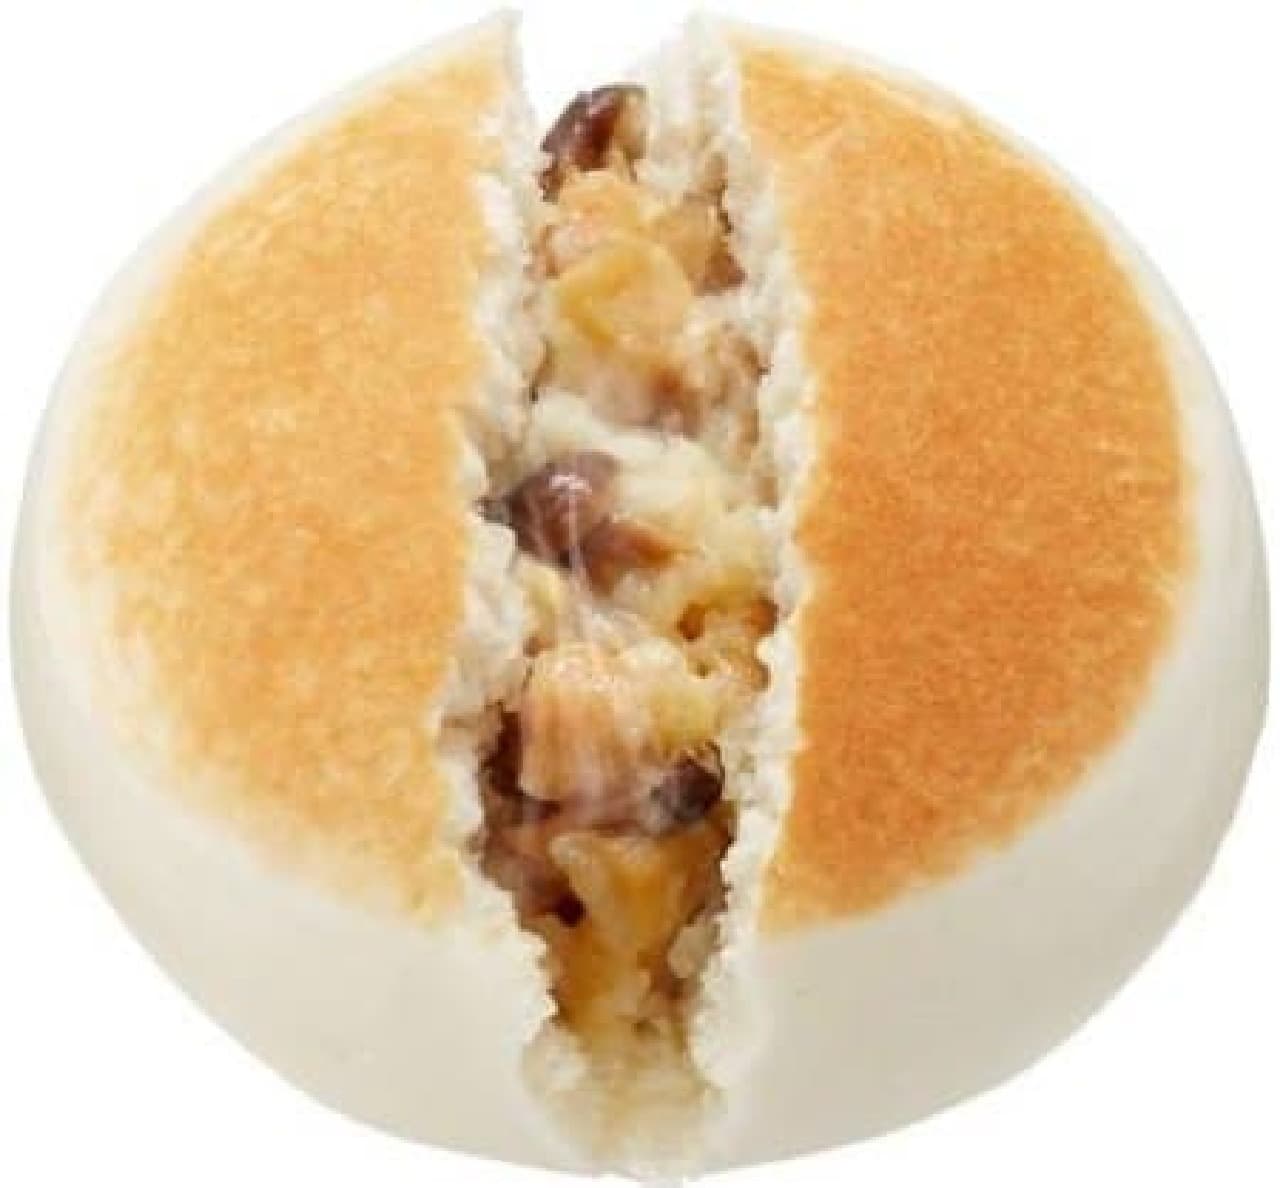 Mushroom cream bun using Hokuto mushrooms